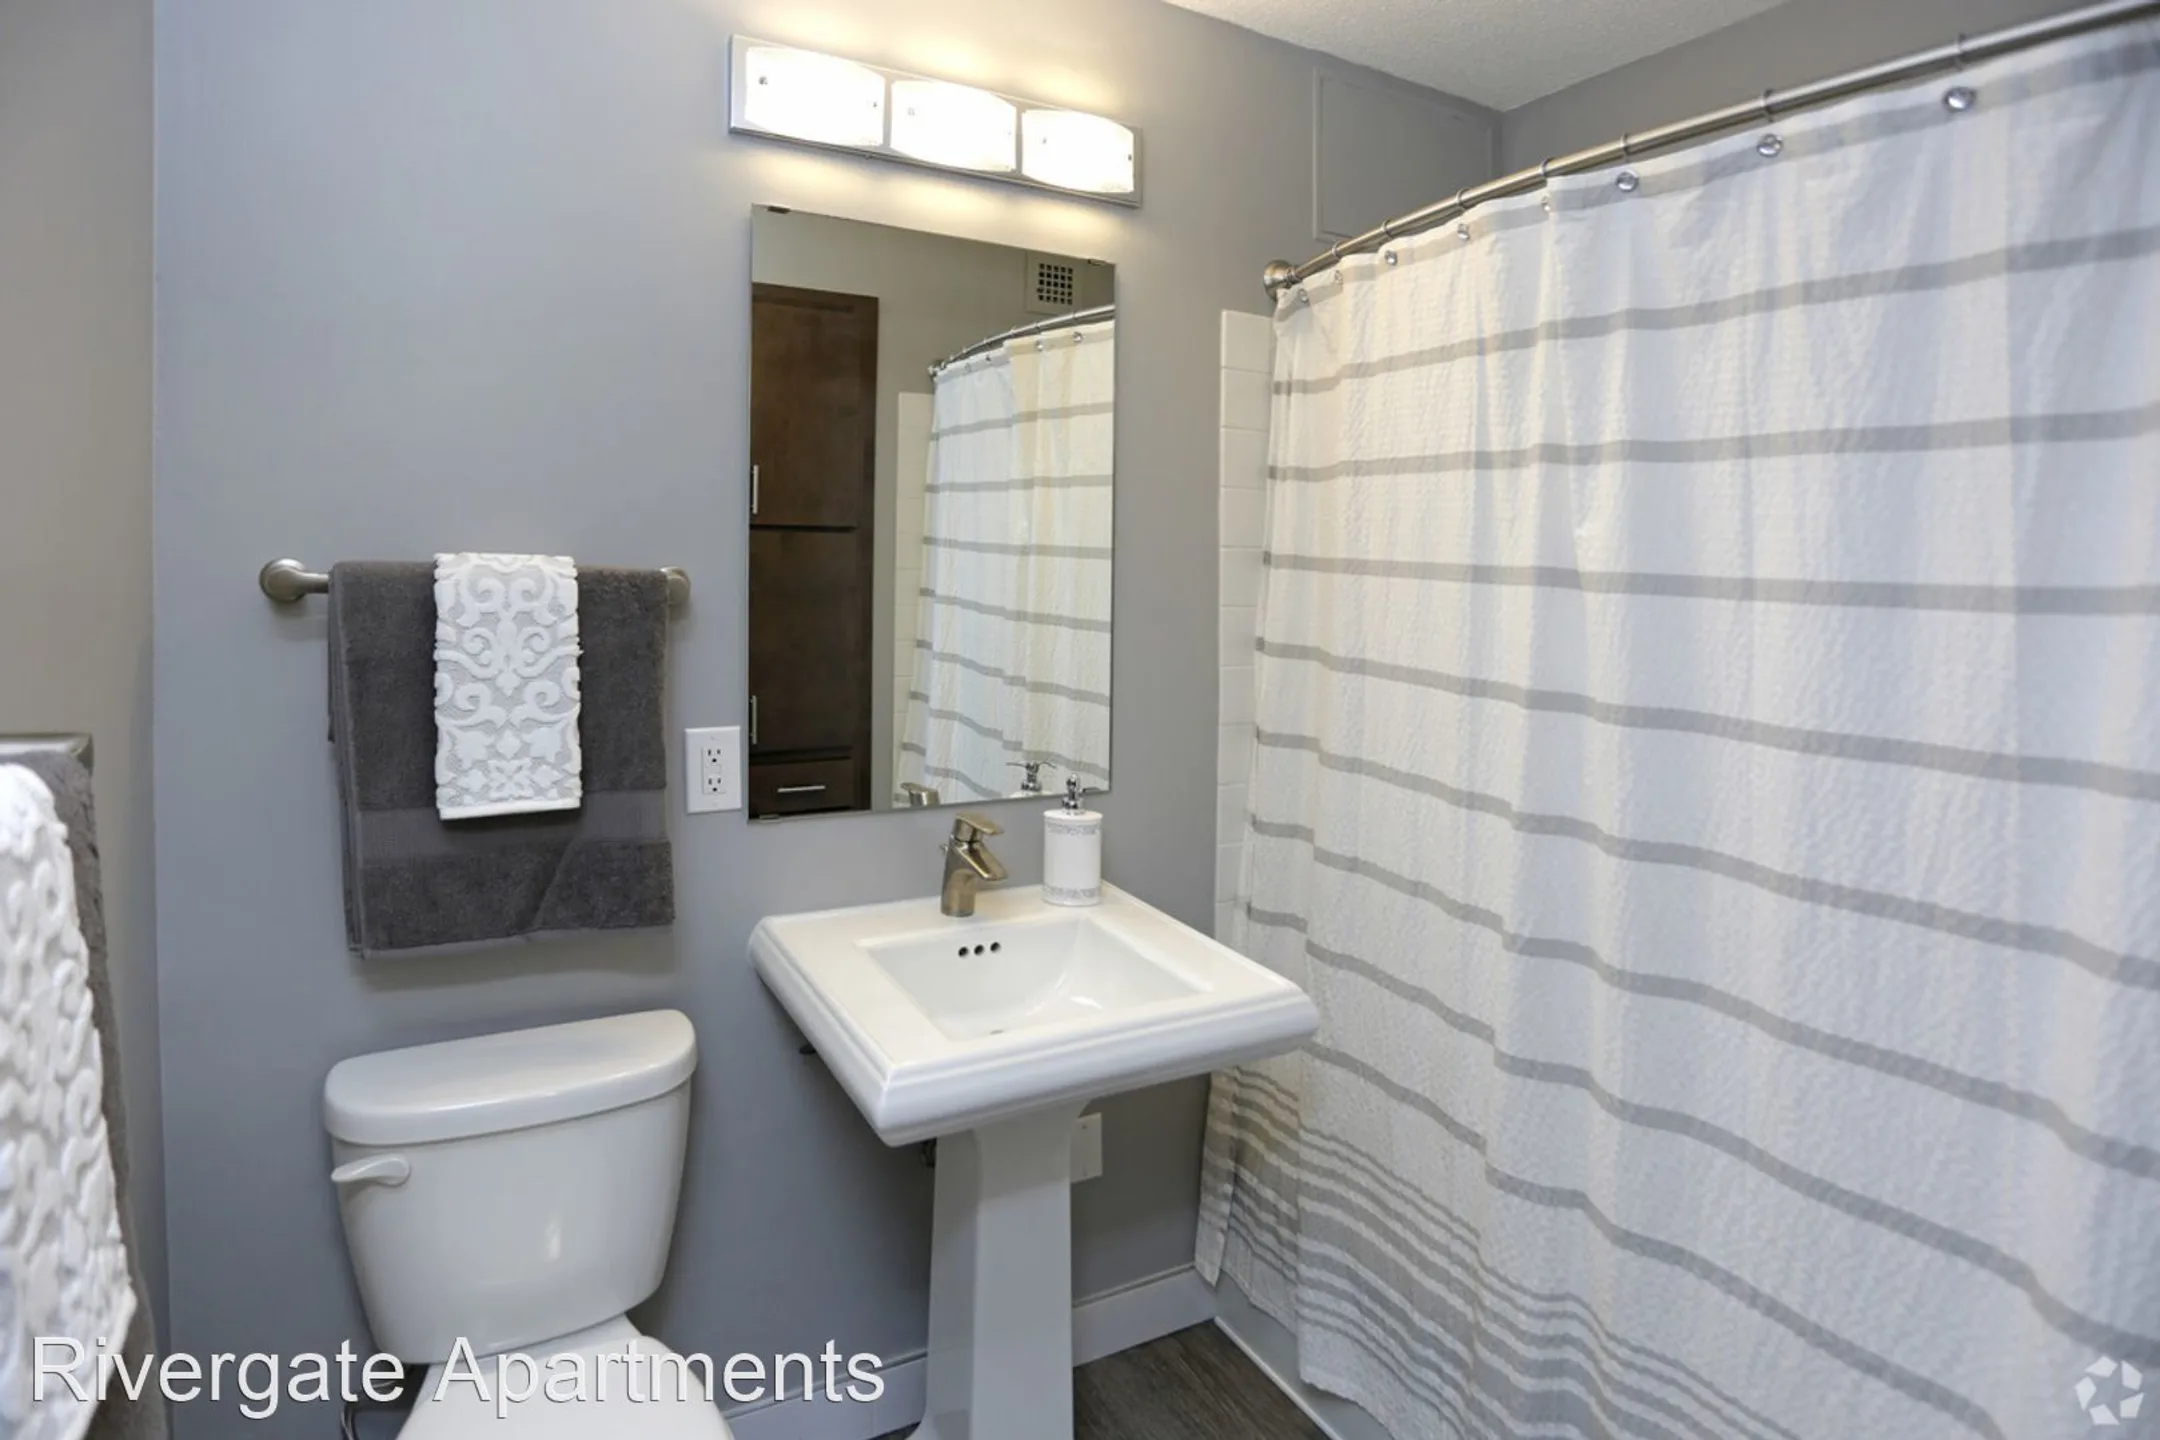 Bathroom - Rivergate Apartments - Minneapolis, MN